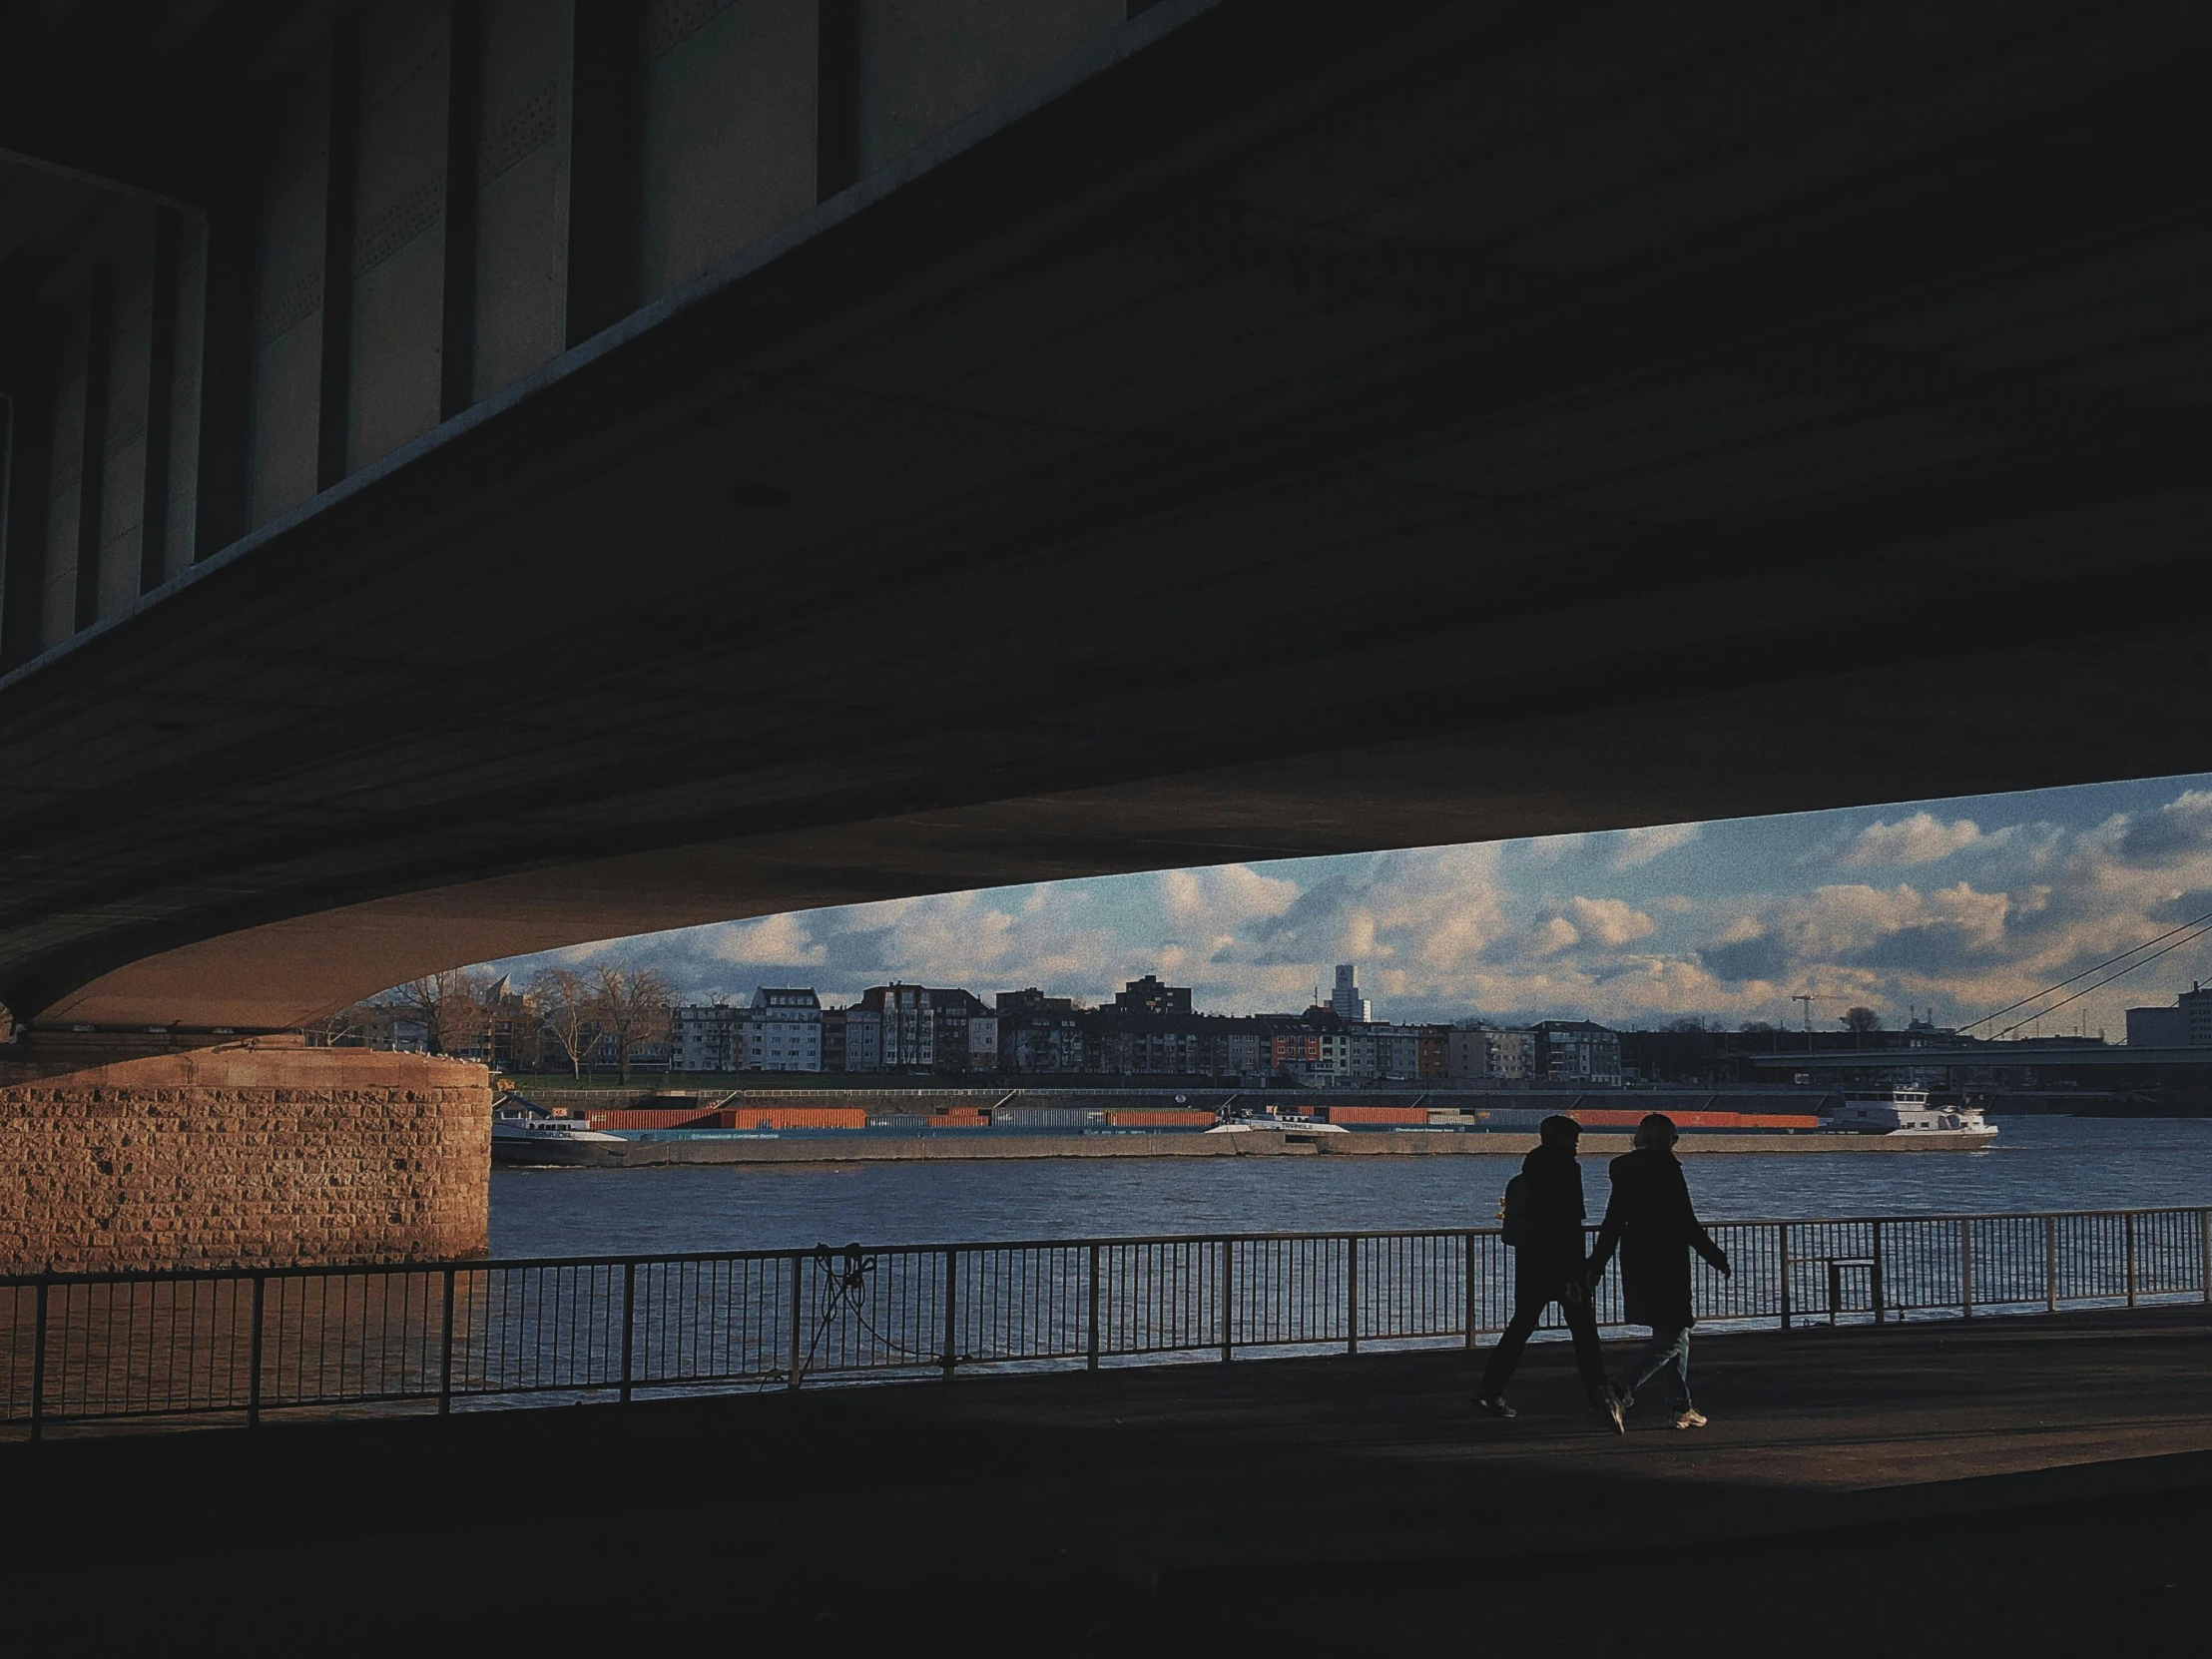 two people walking under a bridge next to a body of water, by Tobias Stimmer, unsplash contest winner, visual art, graded with davinci resolve, budapest street background, medium format. soft light, helsinki